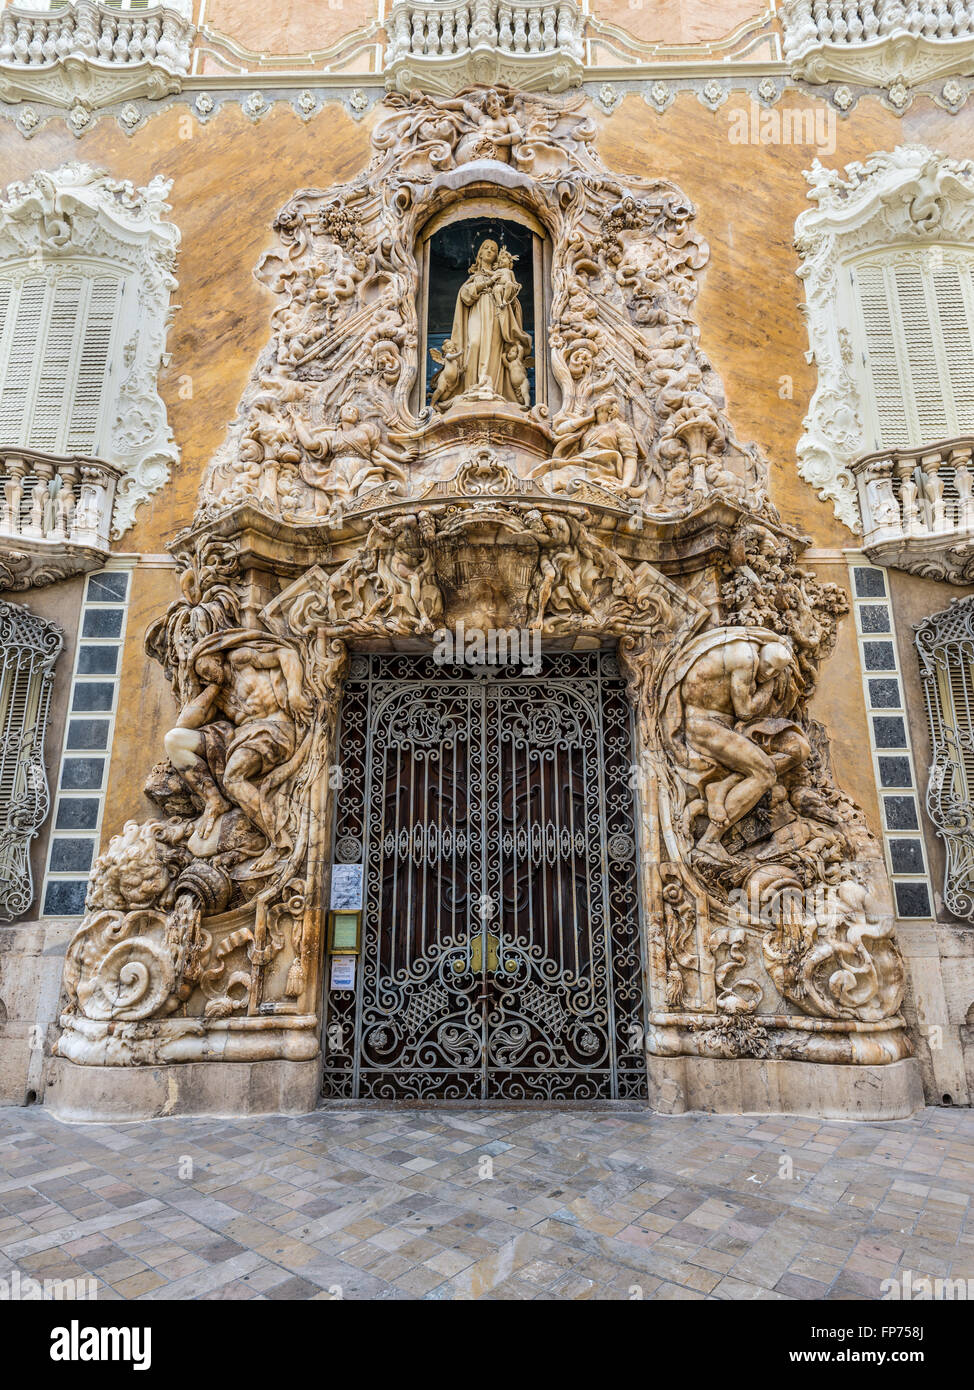 Entrance to the National Ceramics Museum Gonzalez Marti, Valencia, Spain  (The historic Palace of Marques de Dos Aguas Stock Photo - Alamy